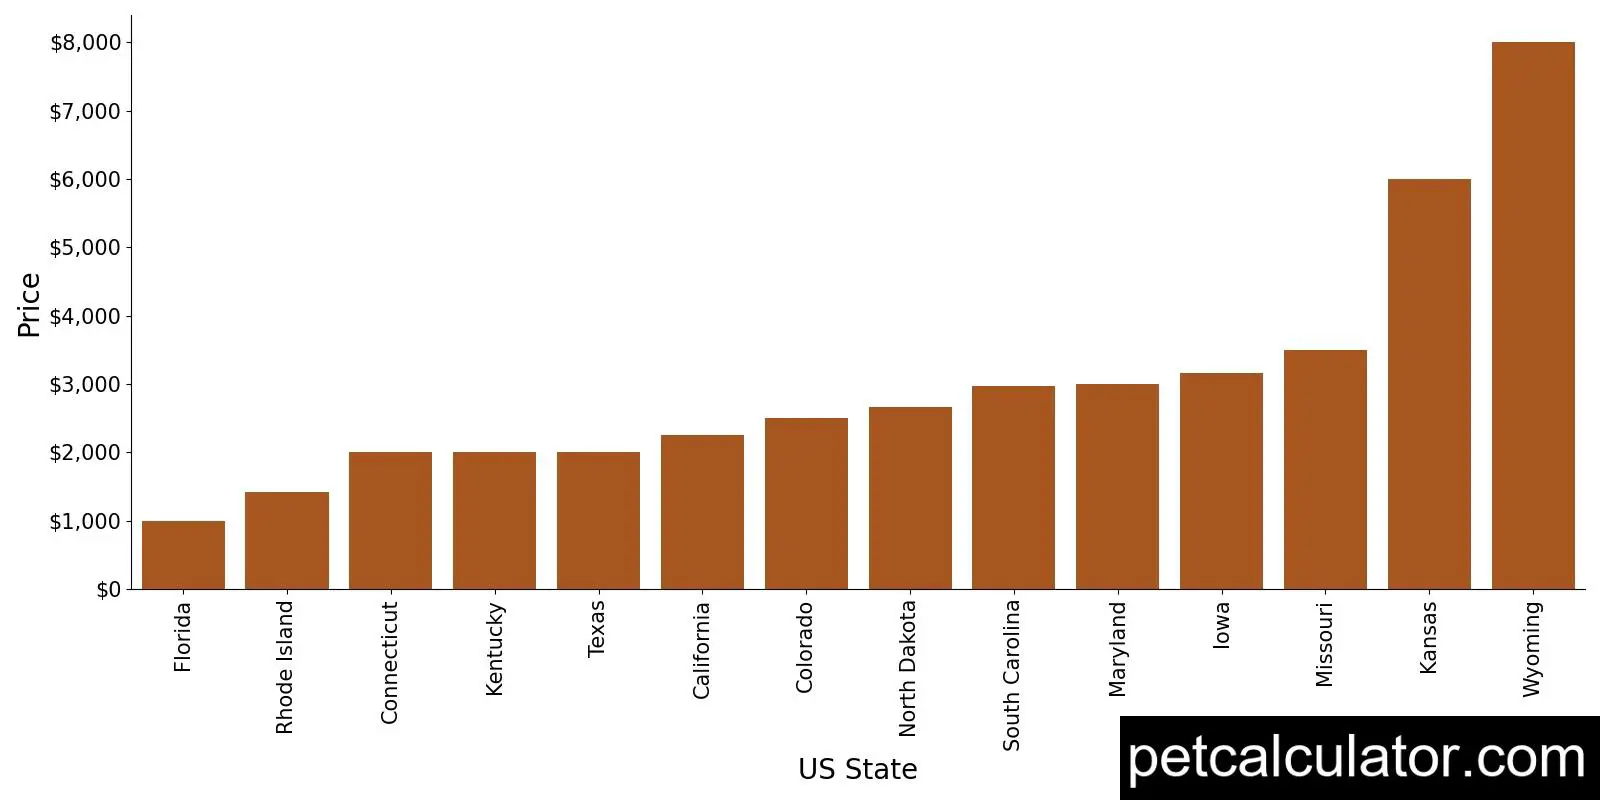 Price of Tibetan Mastiff by US State 